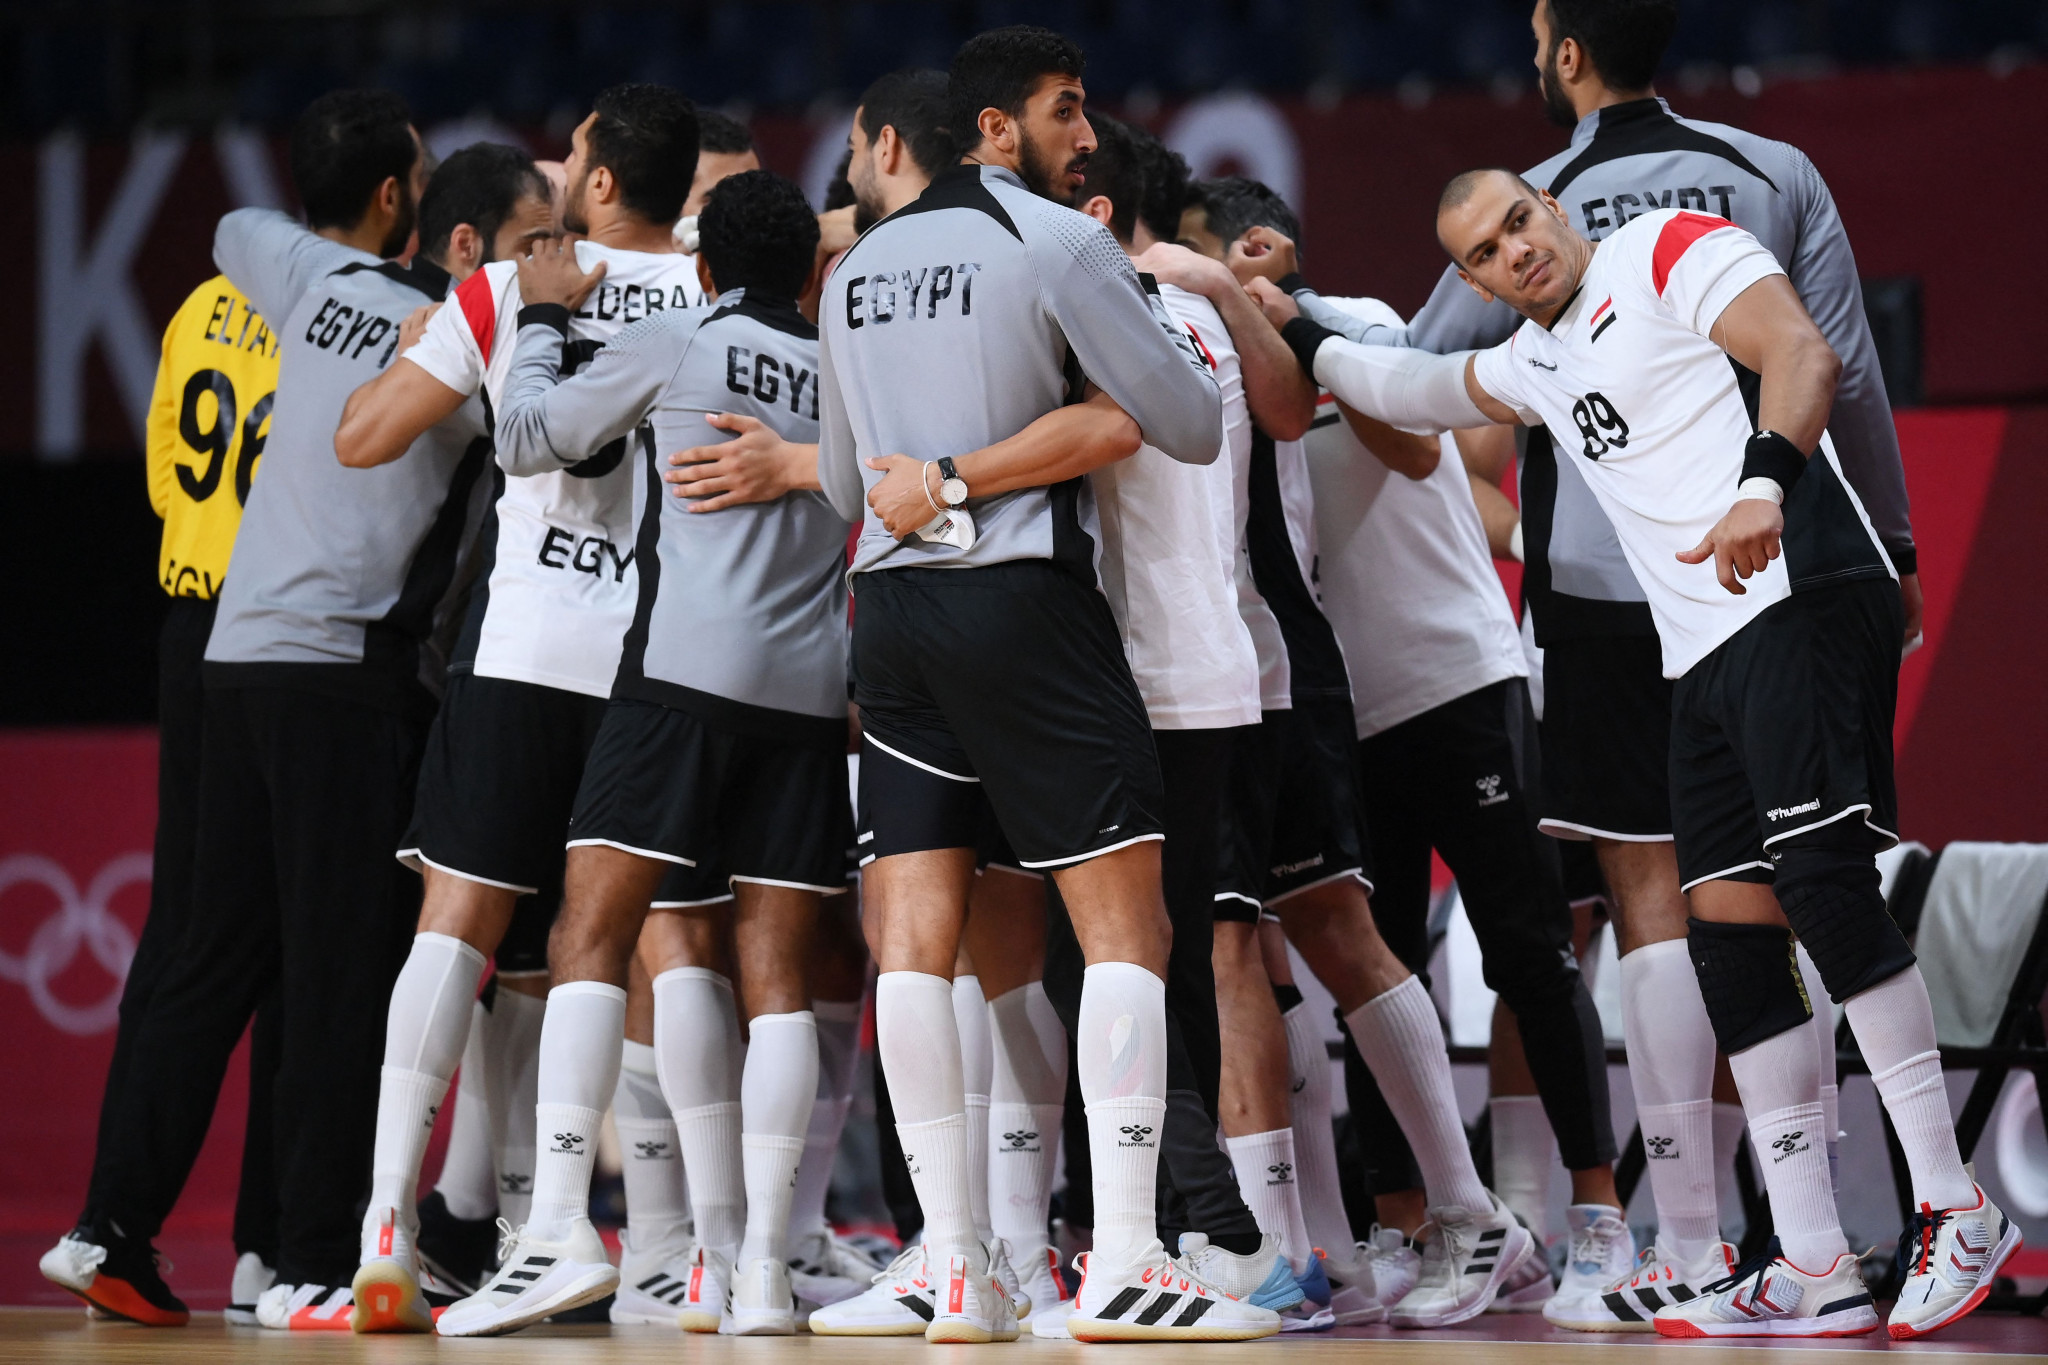 Defending champions Egypt get off to winning start at African Men’s Handball Championship